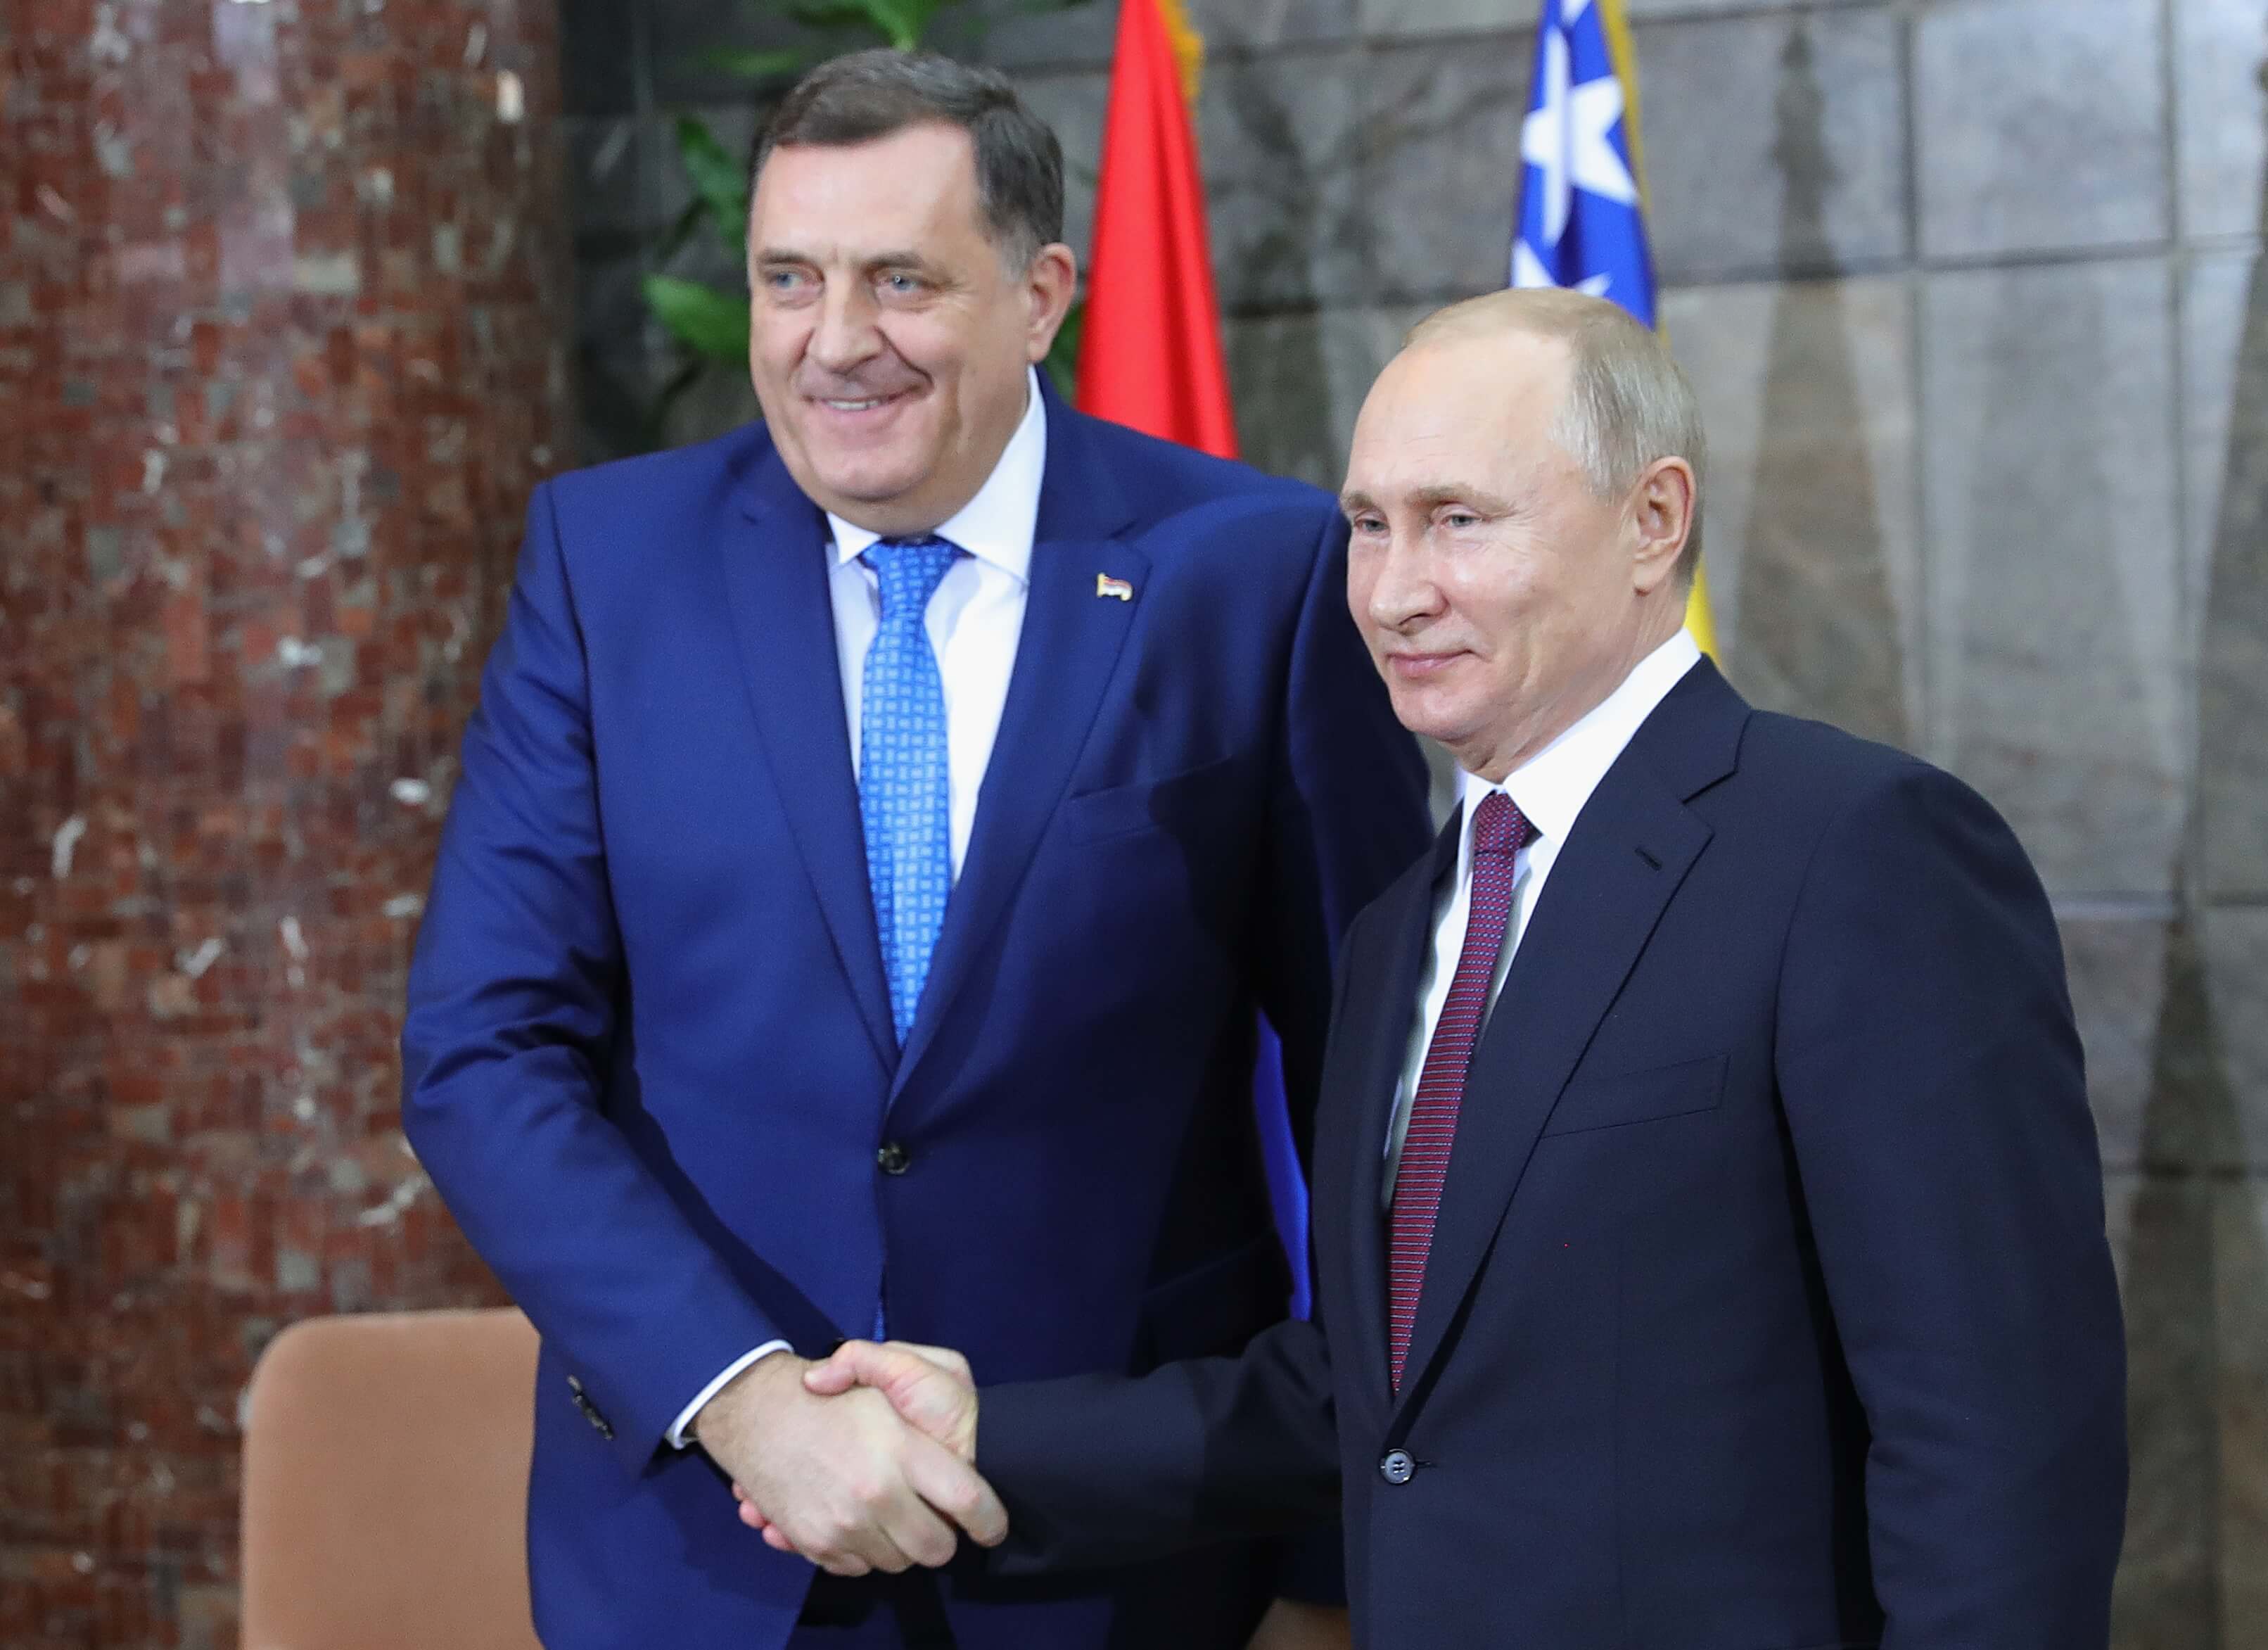 Mujanovic - Russian President Vladimir Putin with Milorad Dodik in Belgrade, Serbia in 2019. Reuters